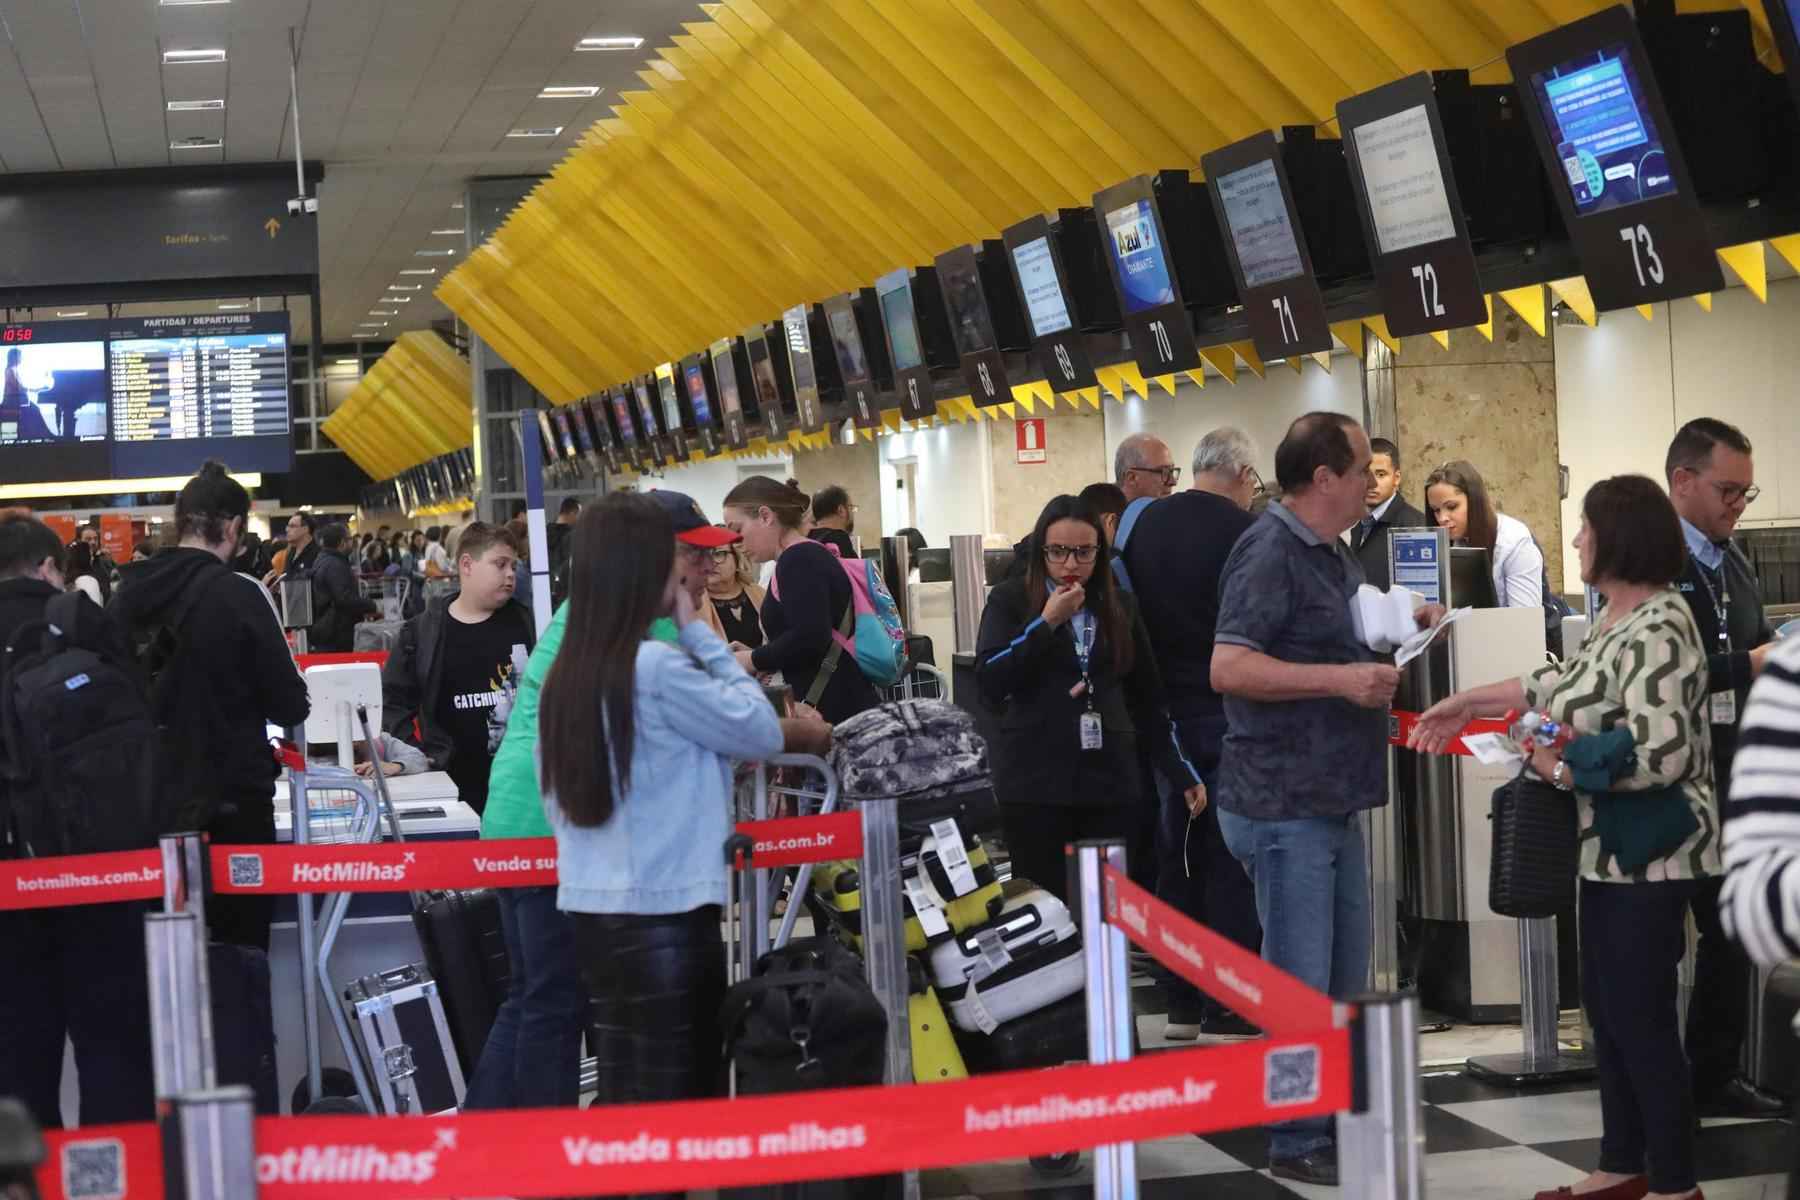 Erro em alerta fecha aeroporto por falsa suspeita de sequestro - Renato S. Cerqueira/Futura Press/Folhapress